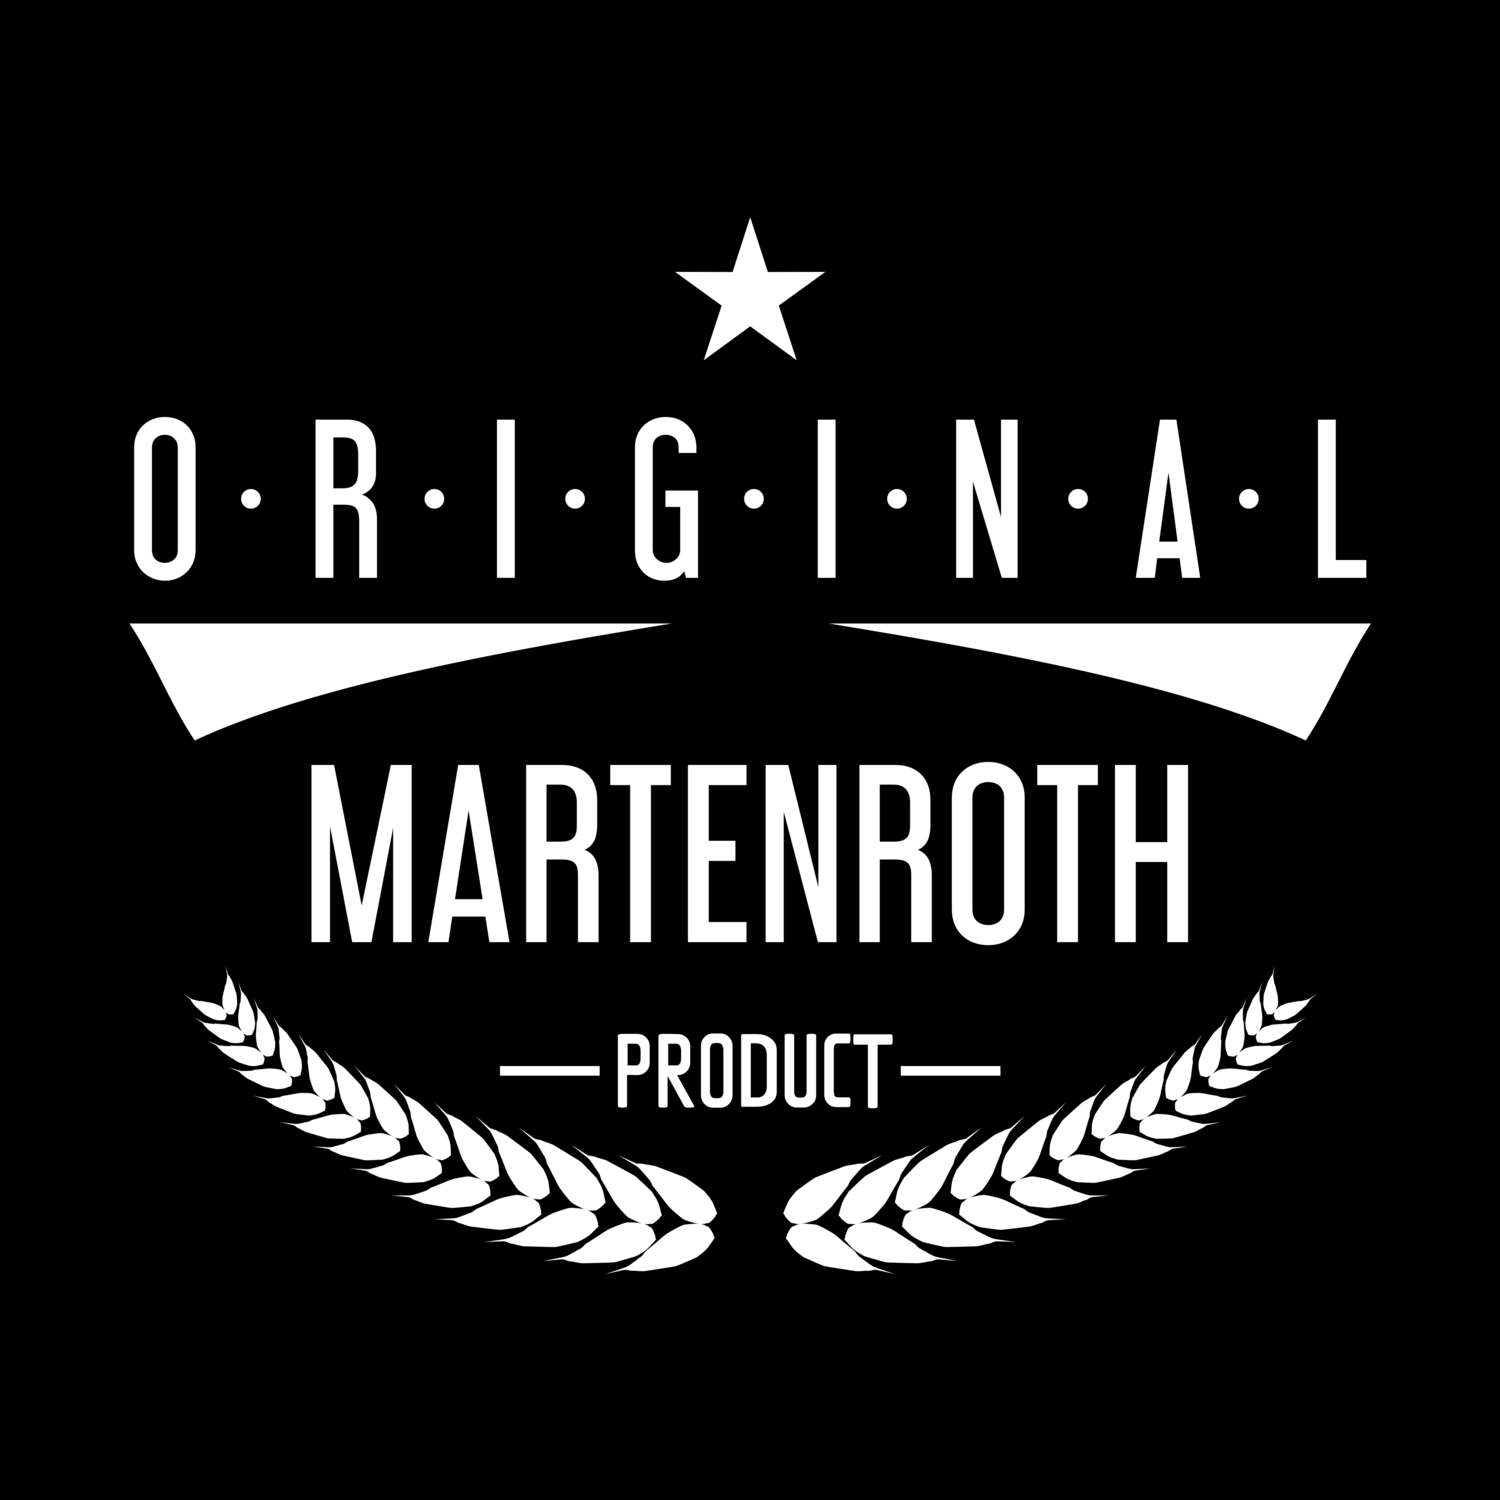 Martenroth T-Shirt »Original Product«